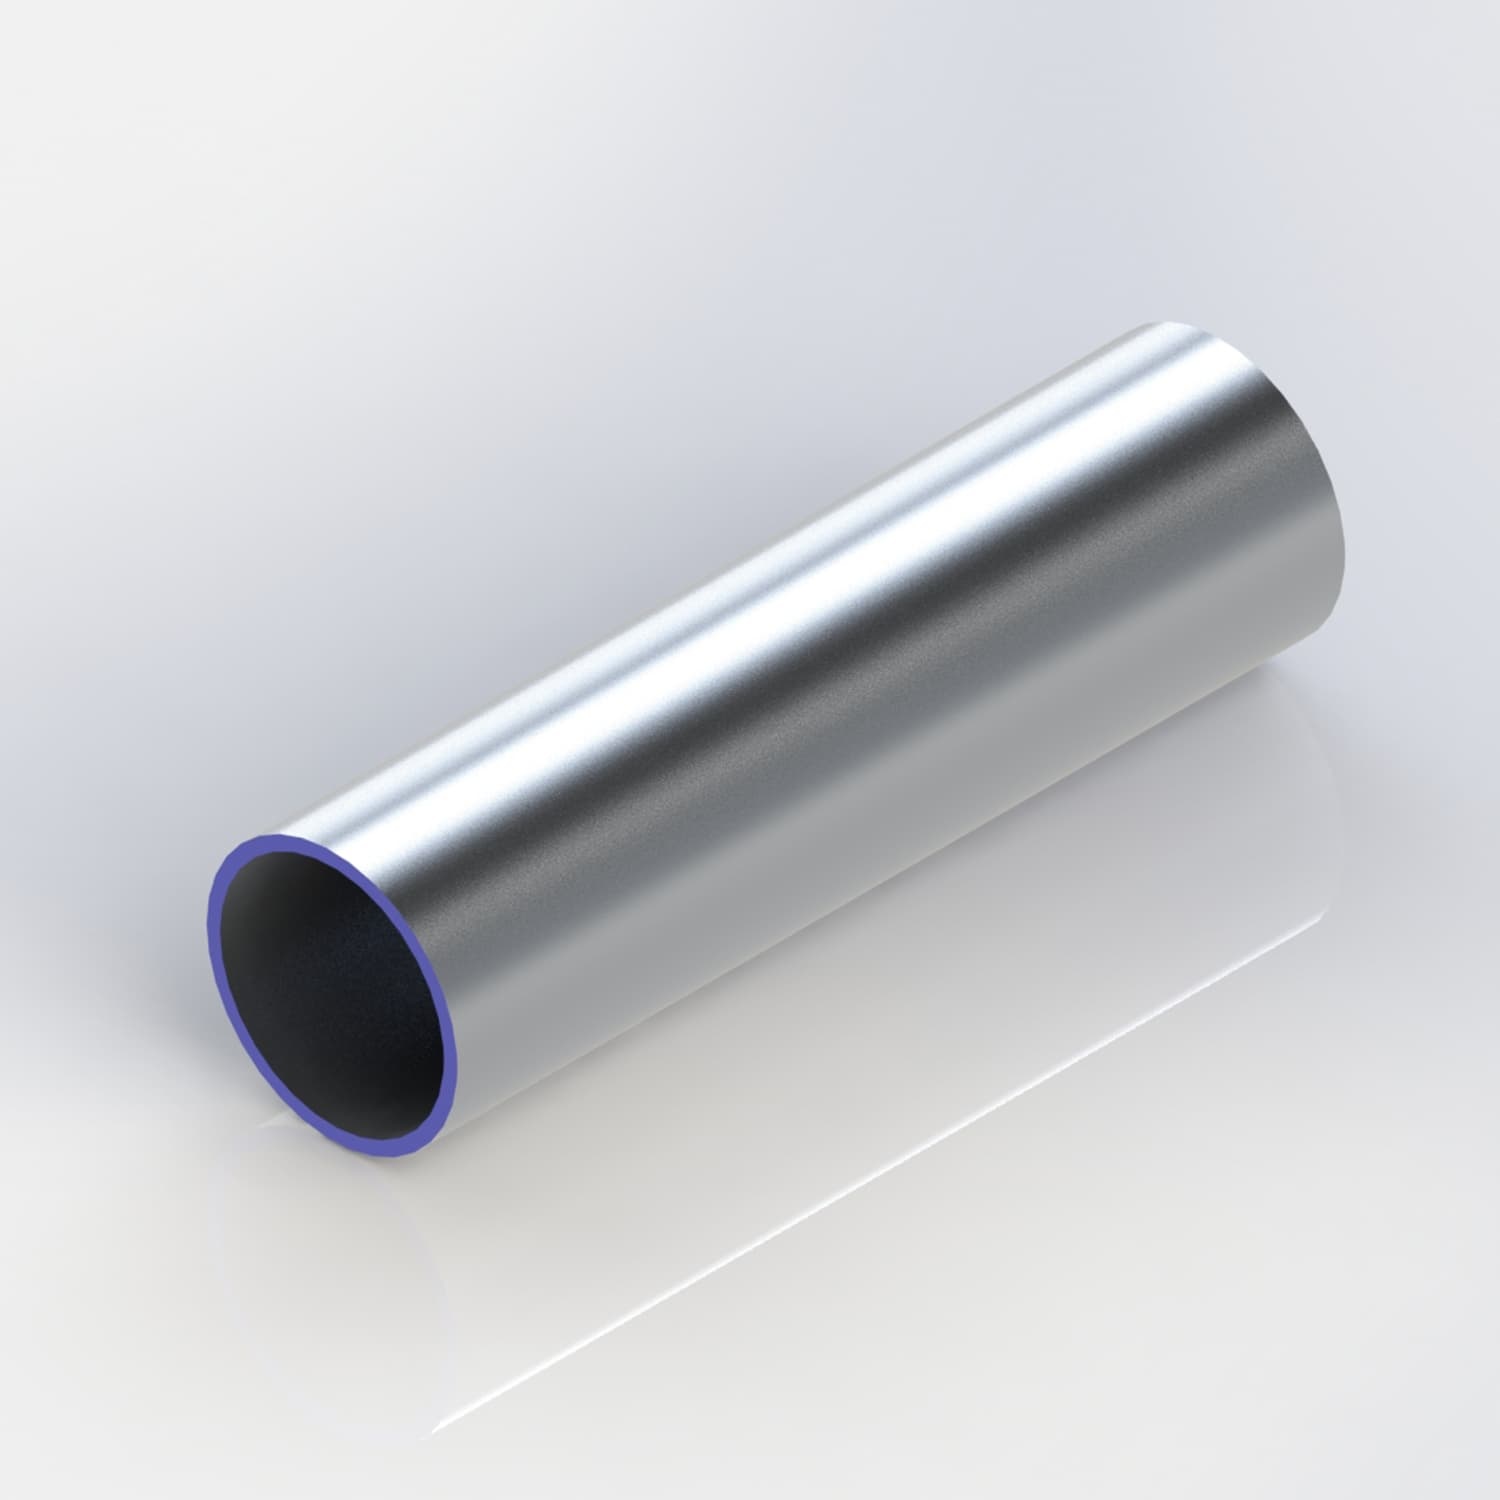 Vergadering Scully Beschrijvend Aluminium buis 35x3 mm - ALU buisprofiel brut - Op Maat tot 600 cm! |  ALUMINIUMvakman